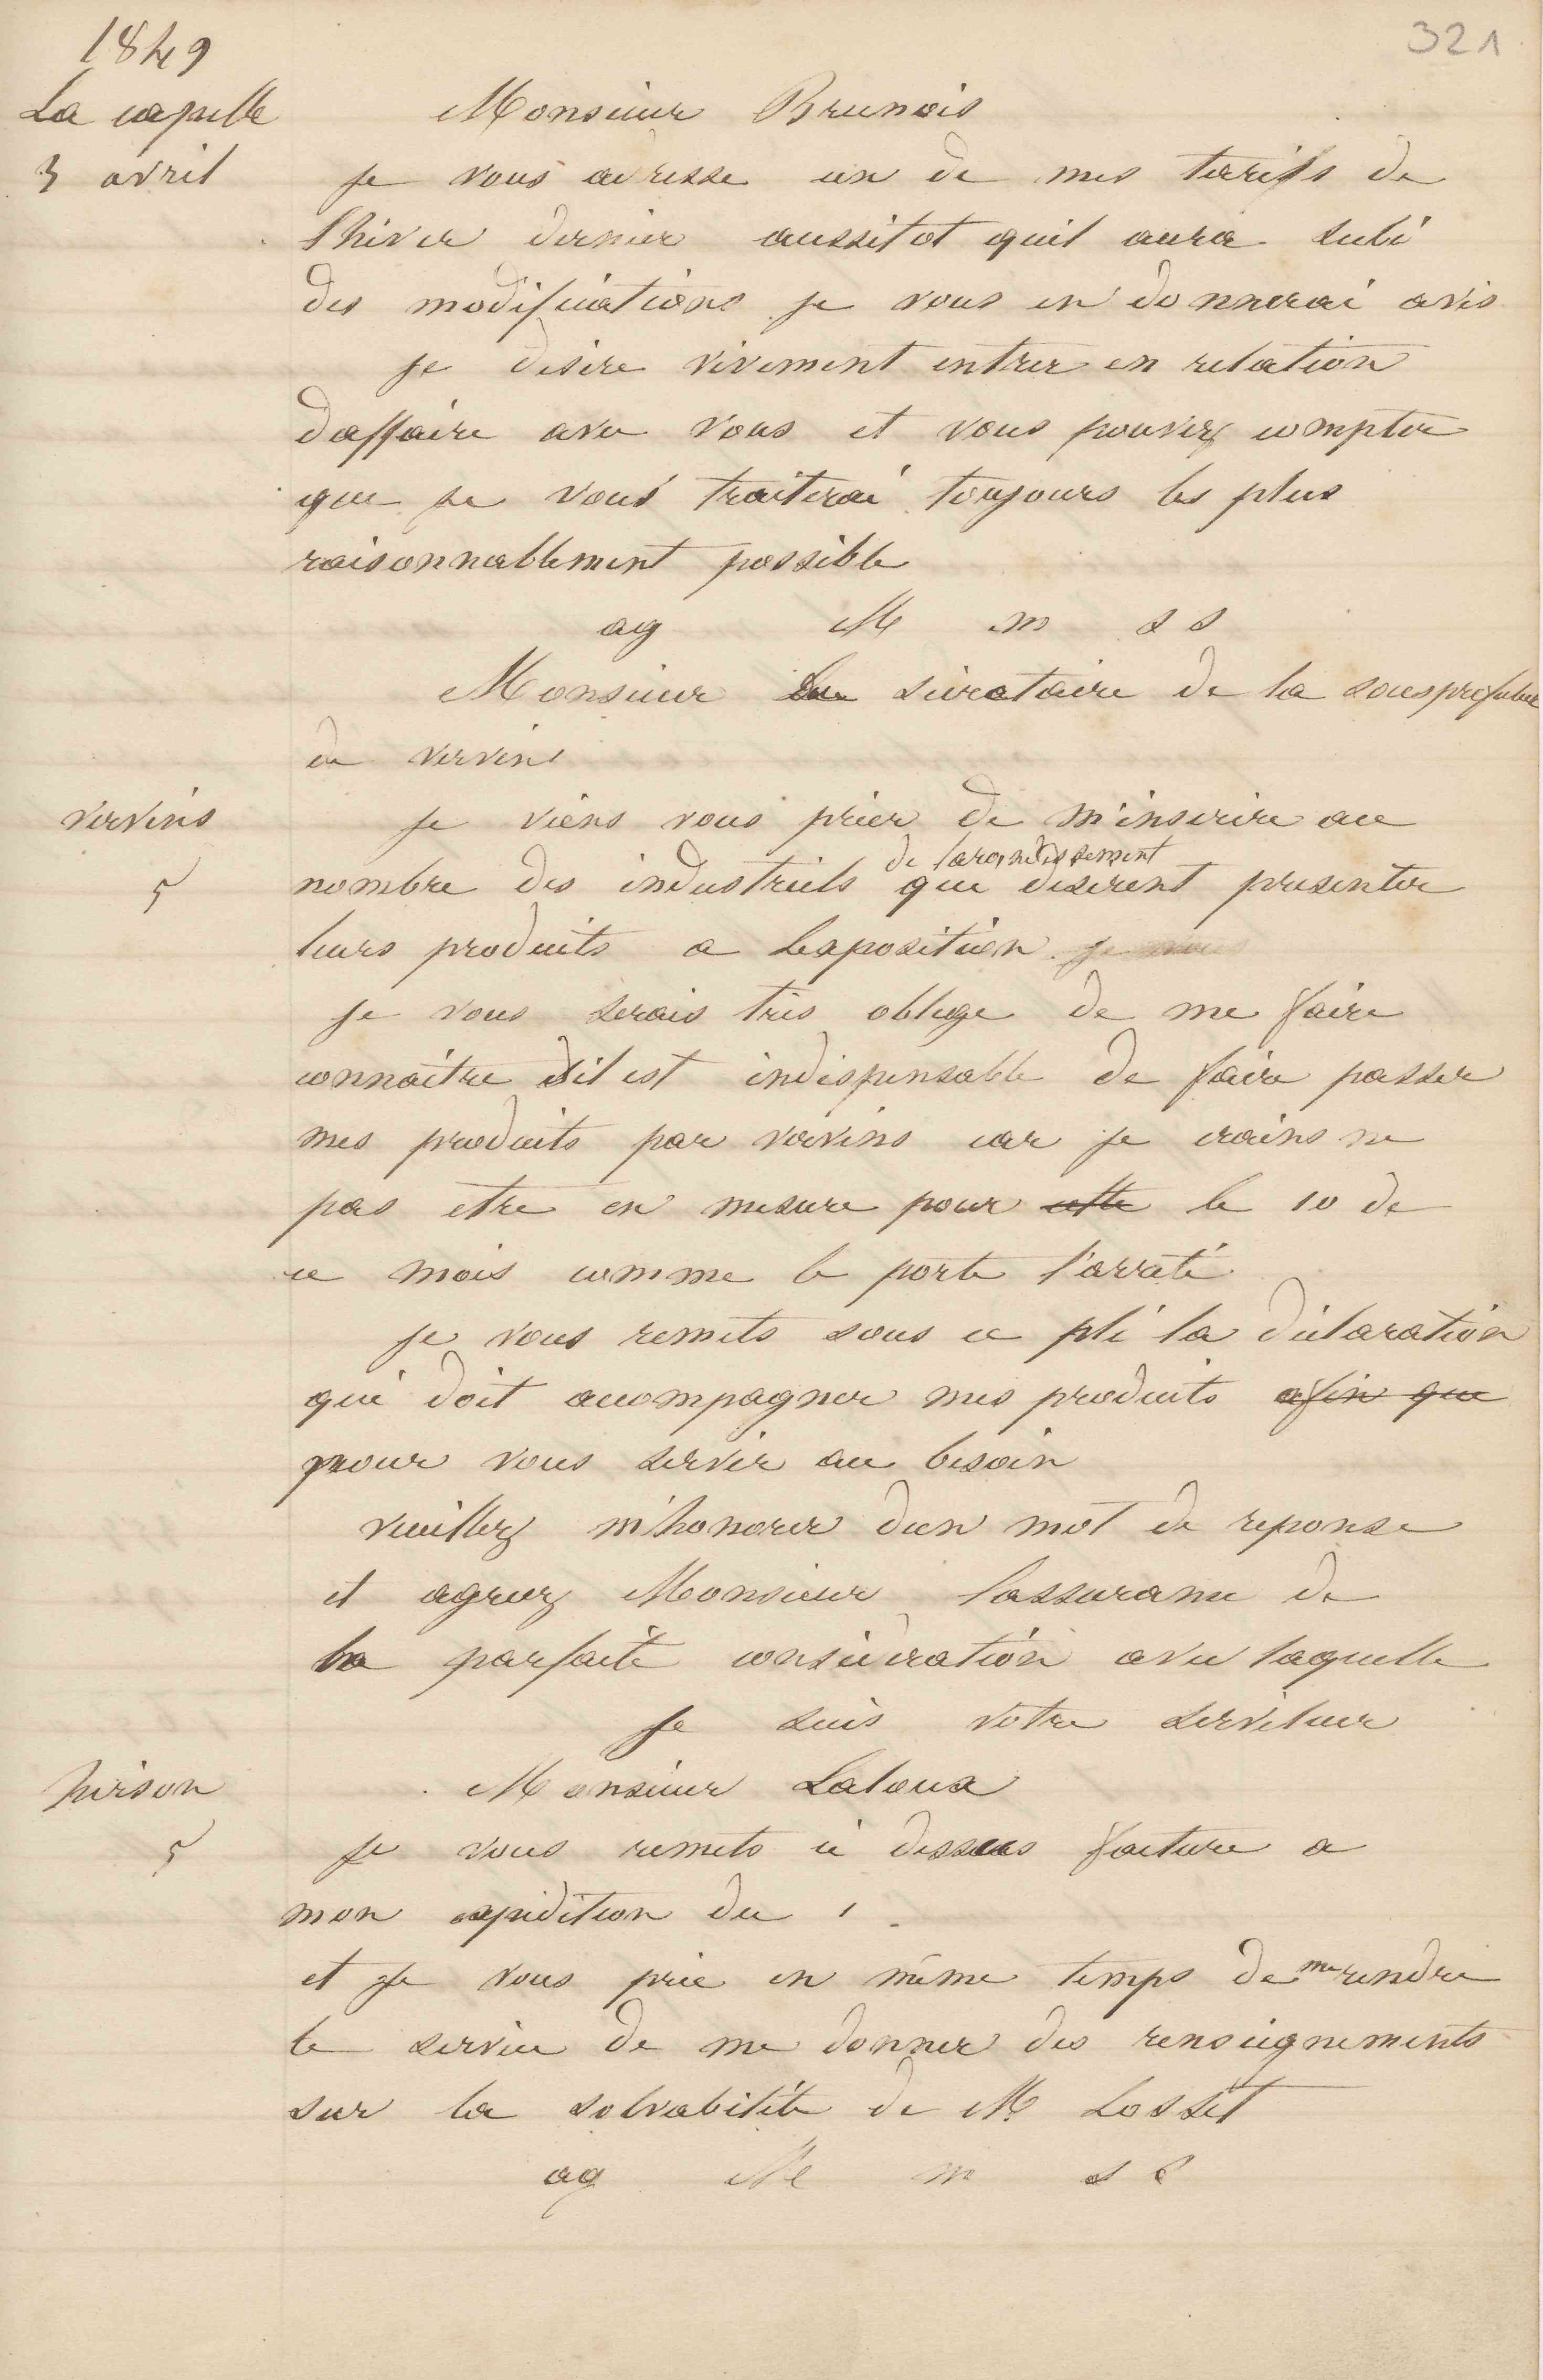 Jean-Baptiste André Godin à monsieur Laloux-Vandelet, 5 avril 1849